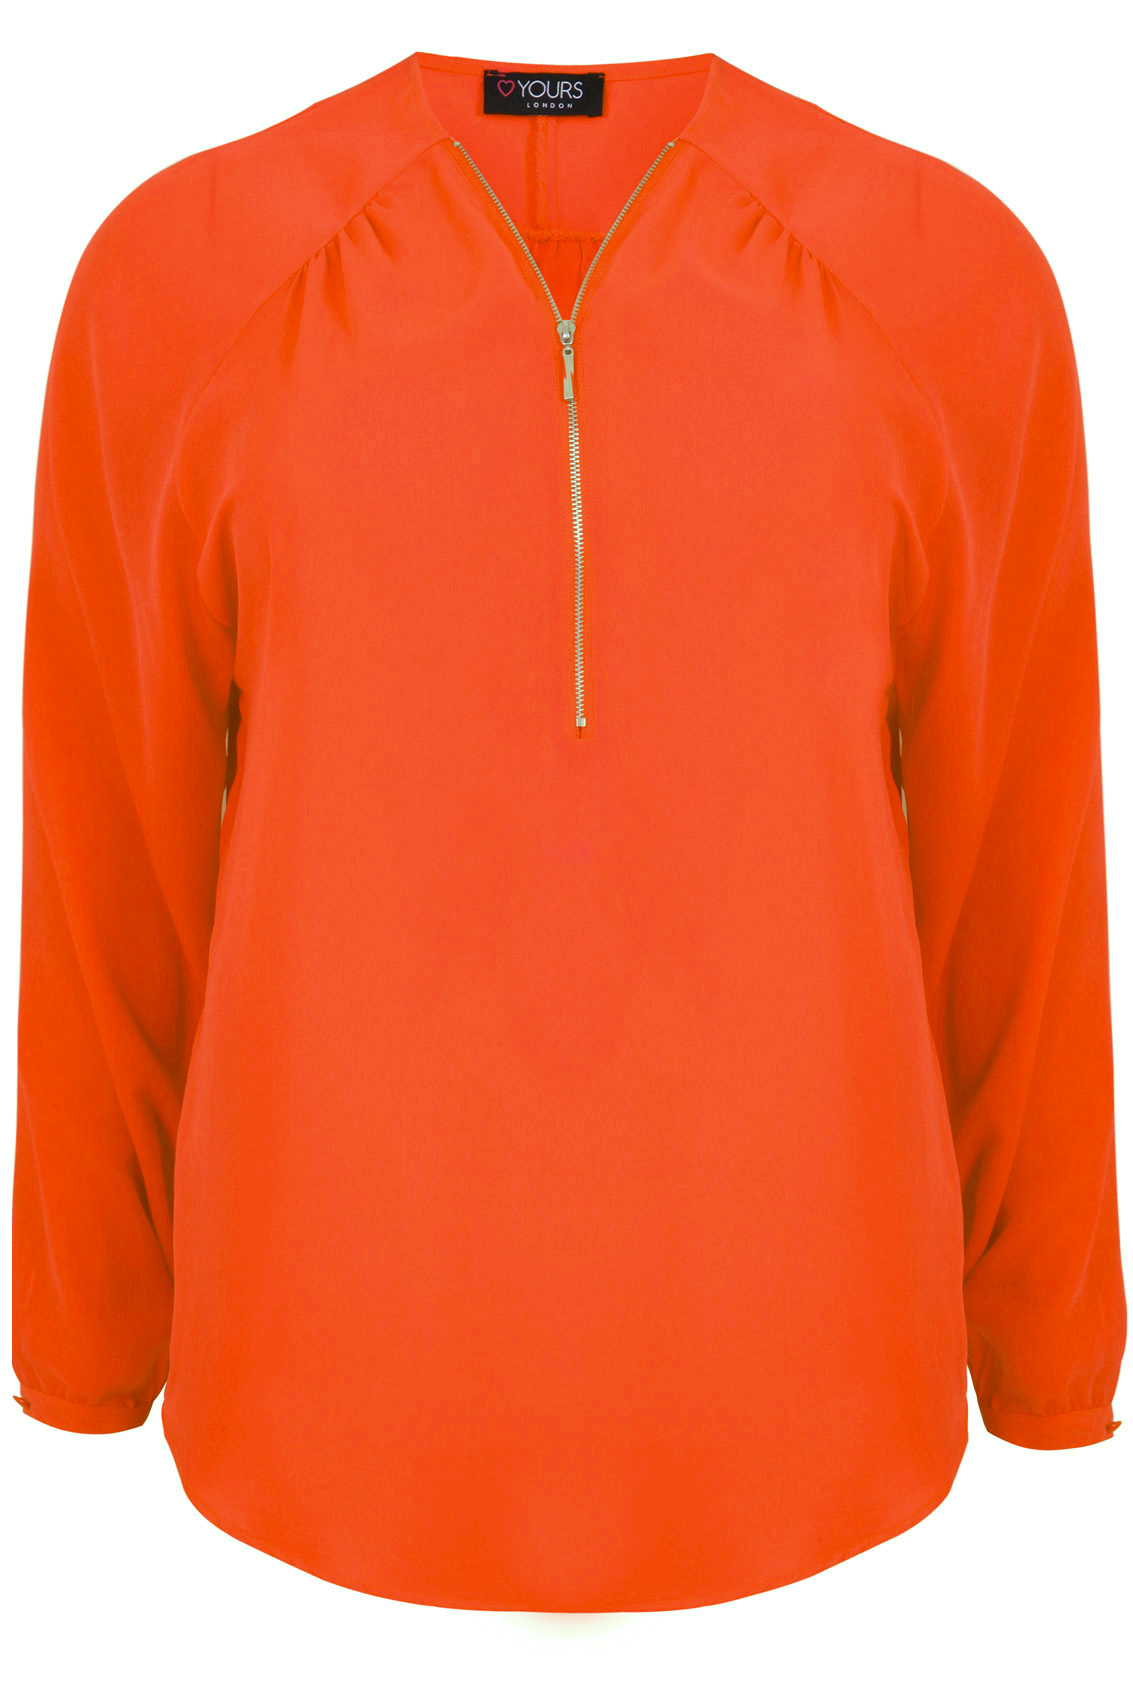 Orange Long Sleeve Zip Front Blouse Plus Size 16,18,20,22,24,26,28,30,32